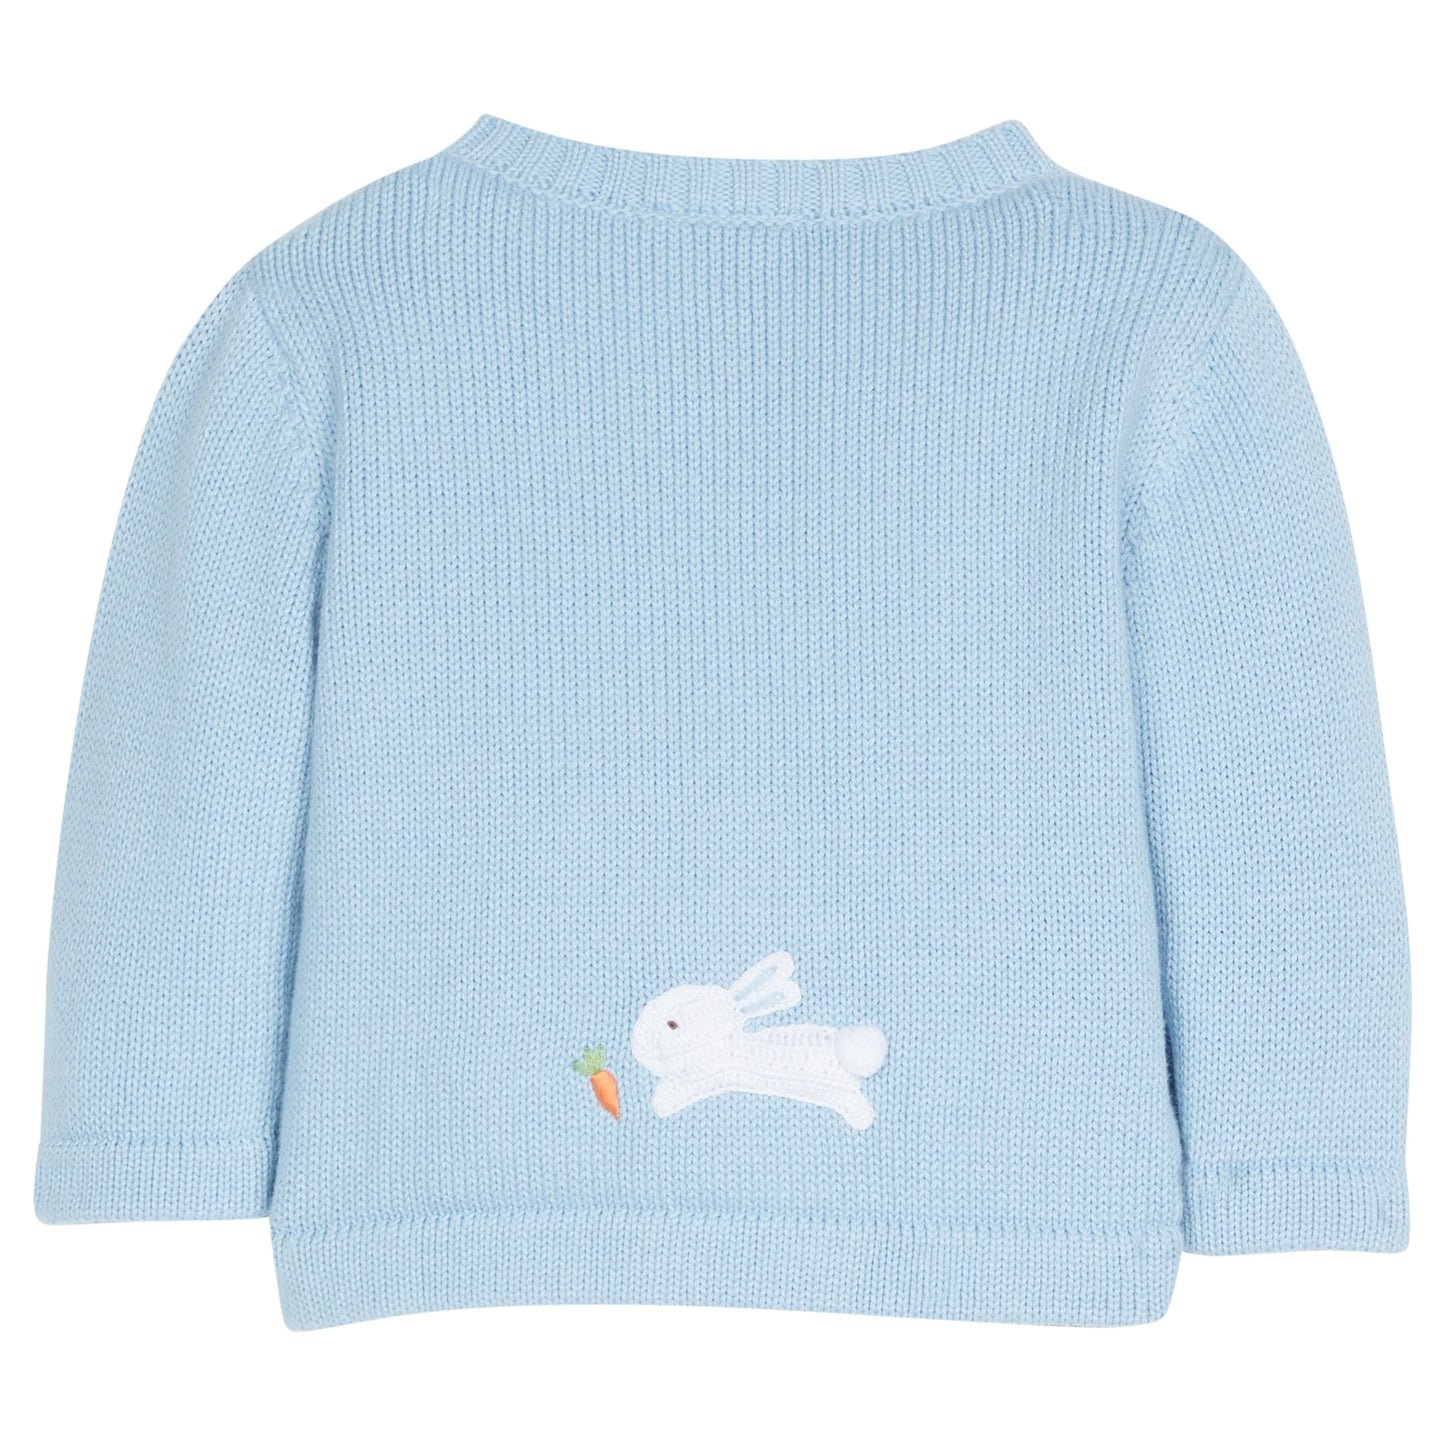 Little English Crochet Sweater - Blue Bunny